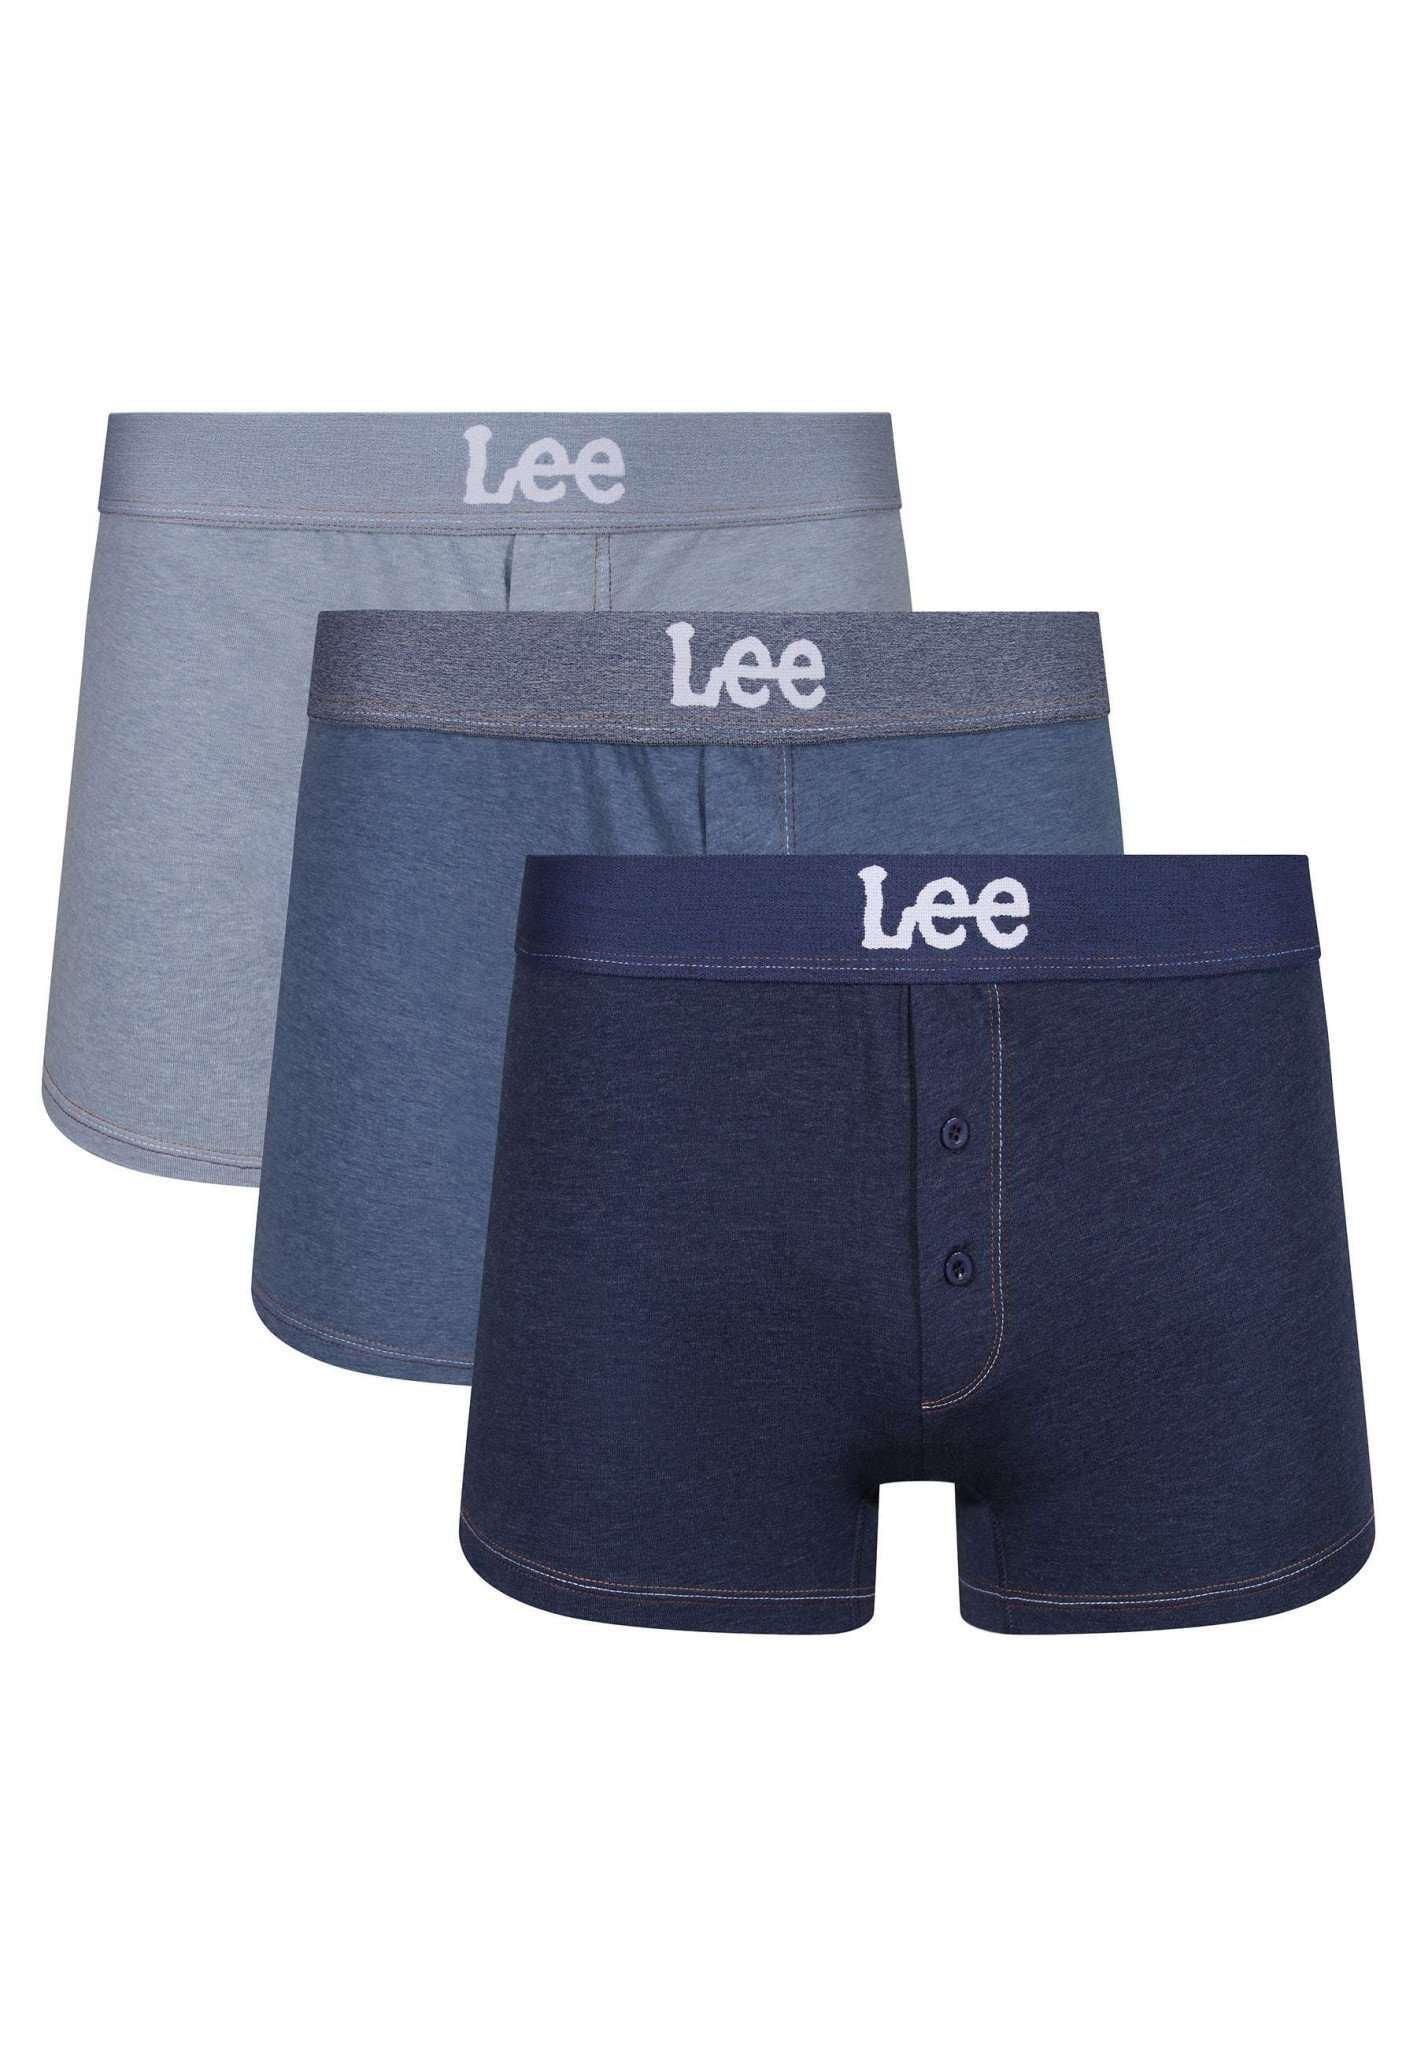 Lee  Panties 3 Pack Trunks Rushton 